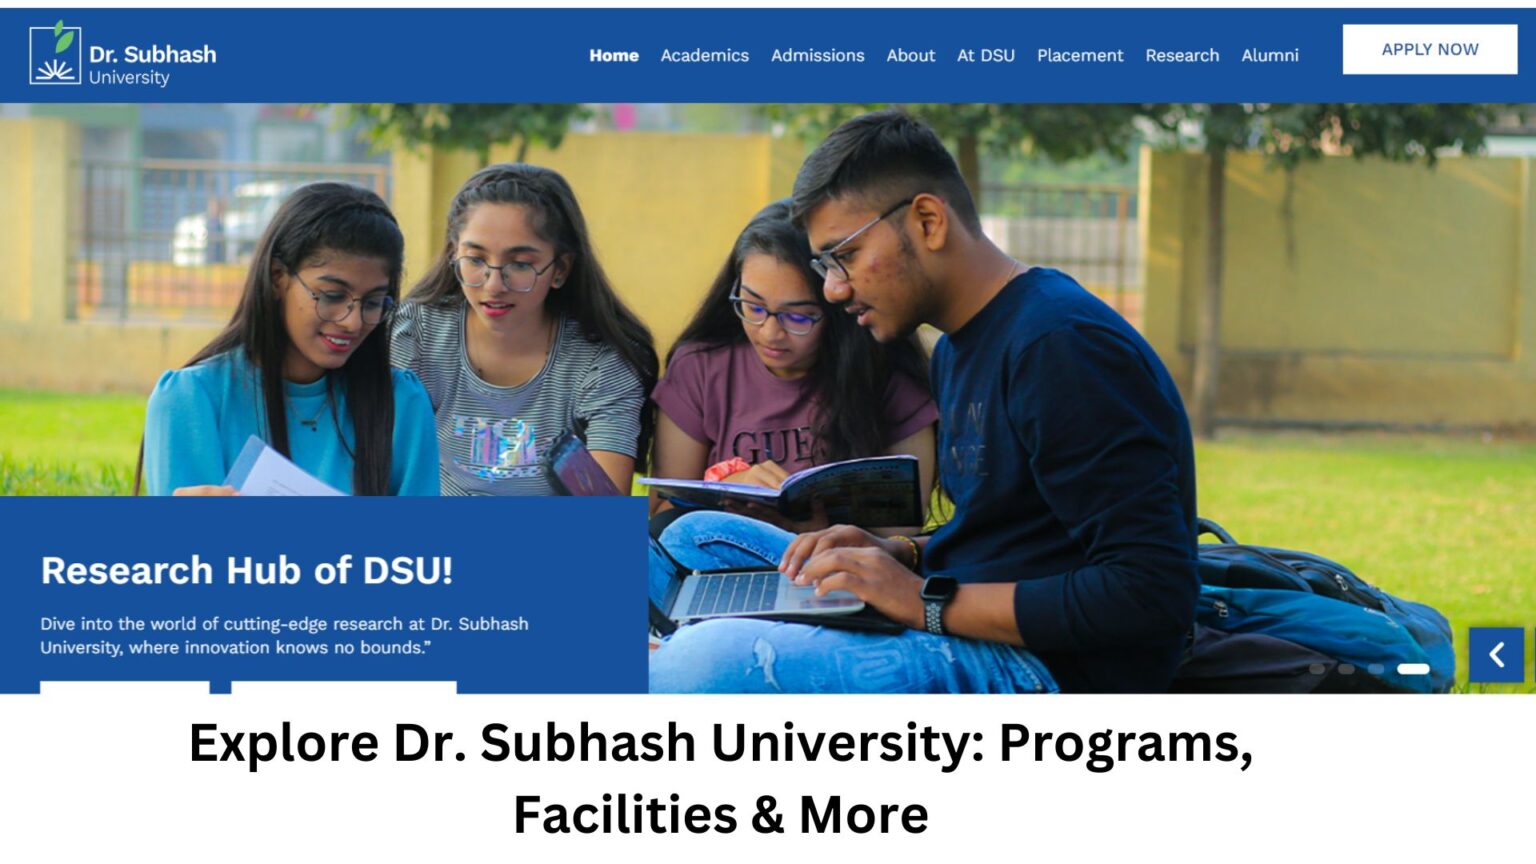 Explore Dr. Subhash University Programs, Facilities & More